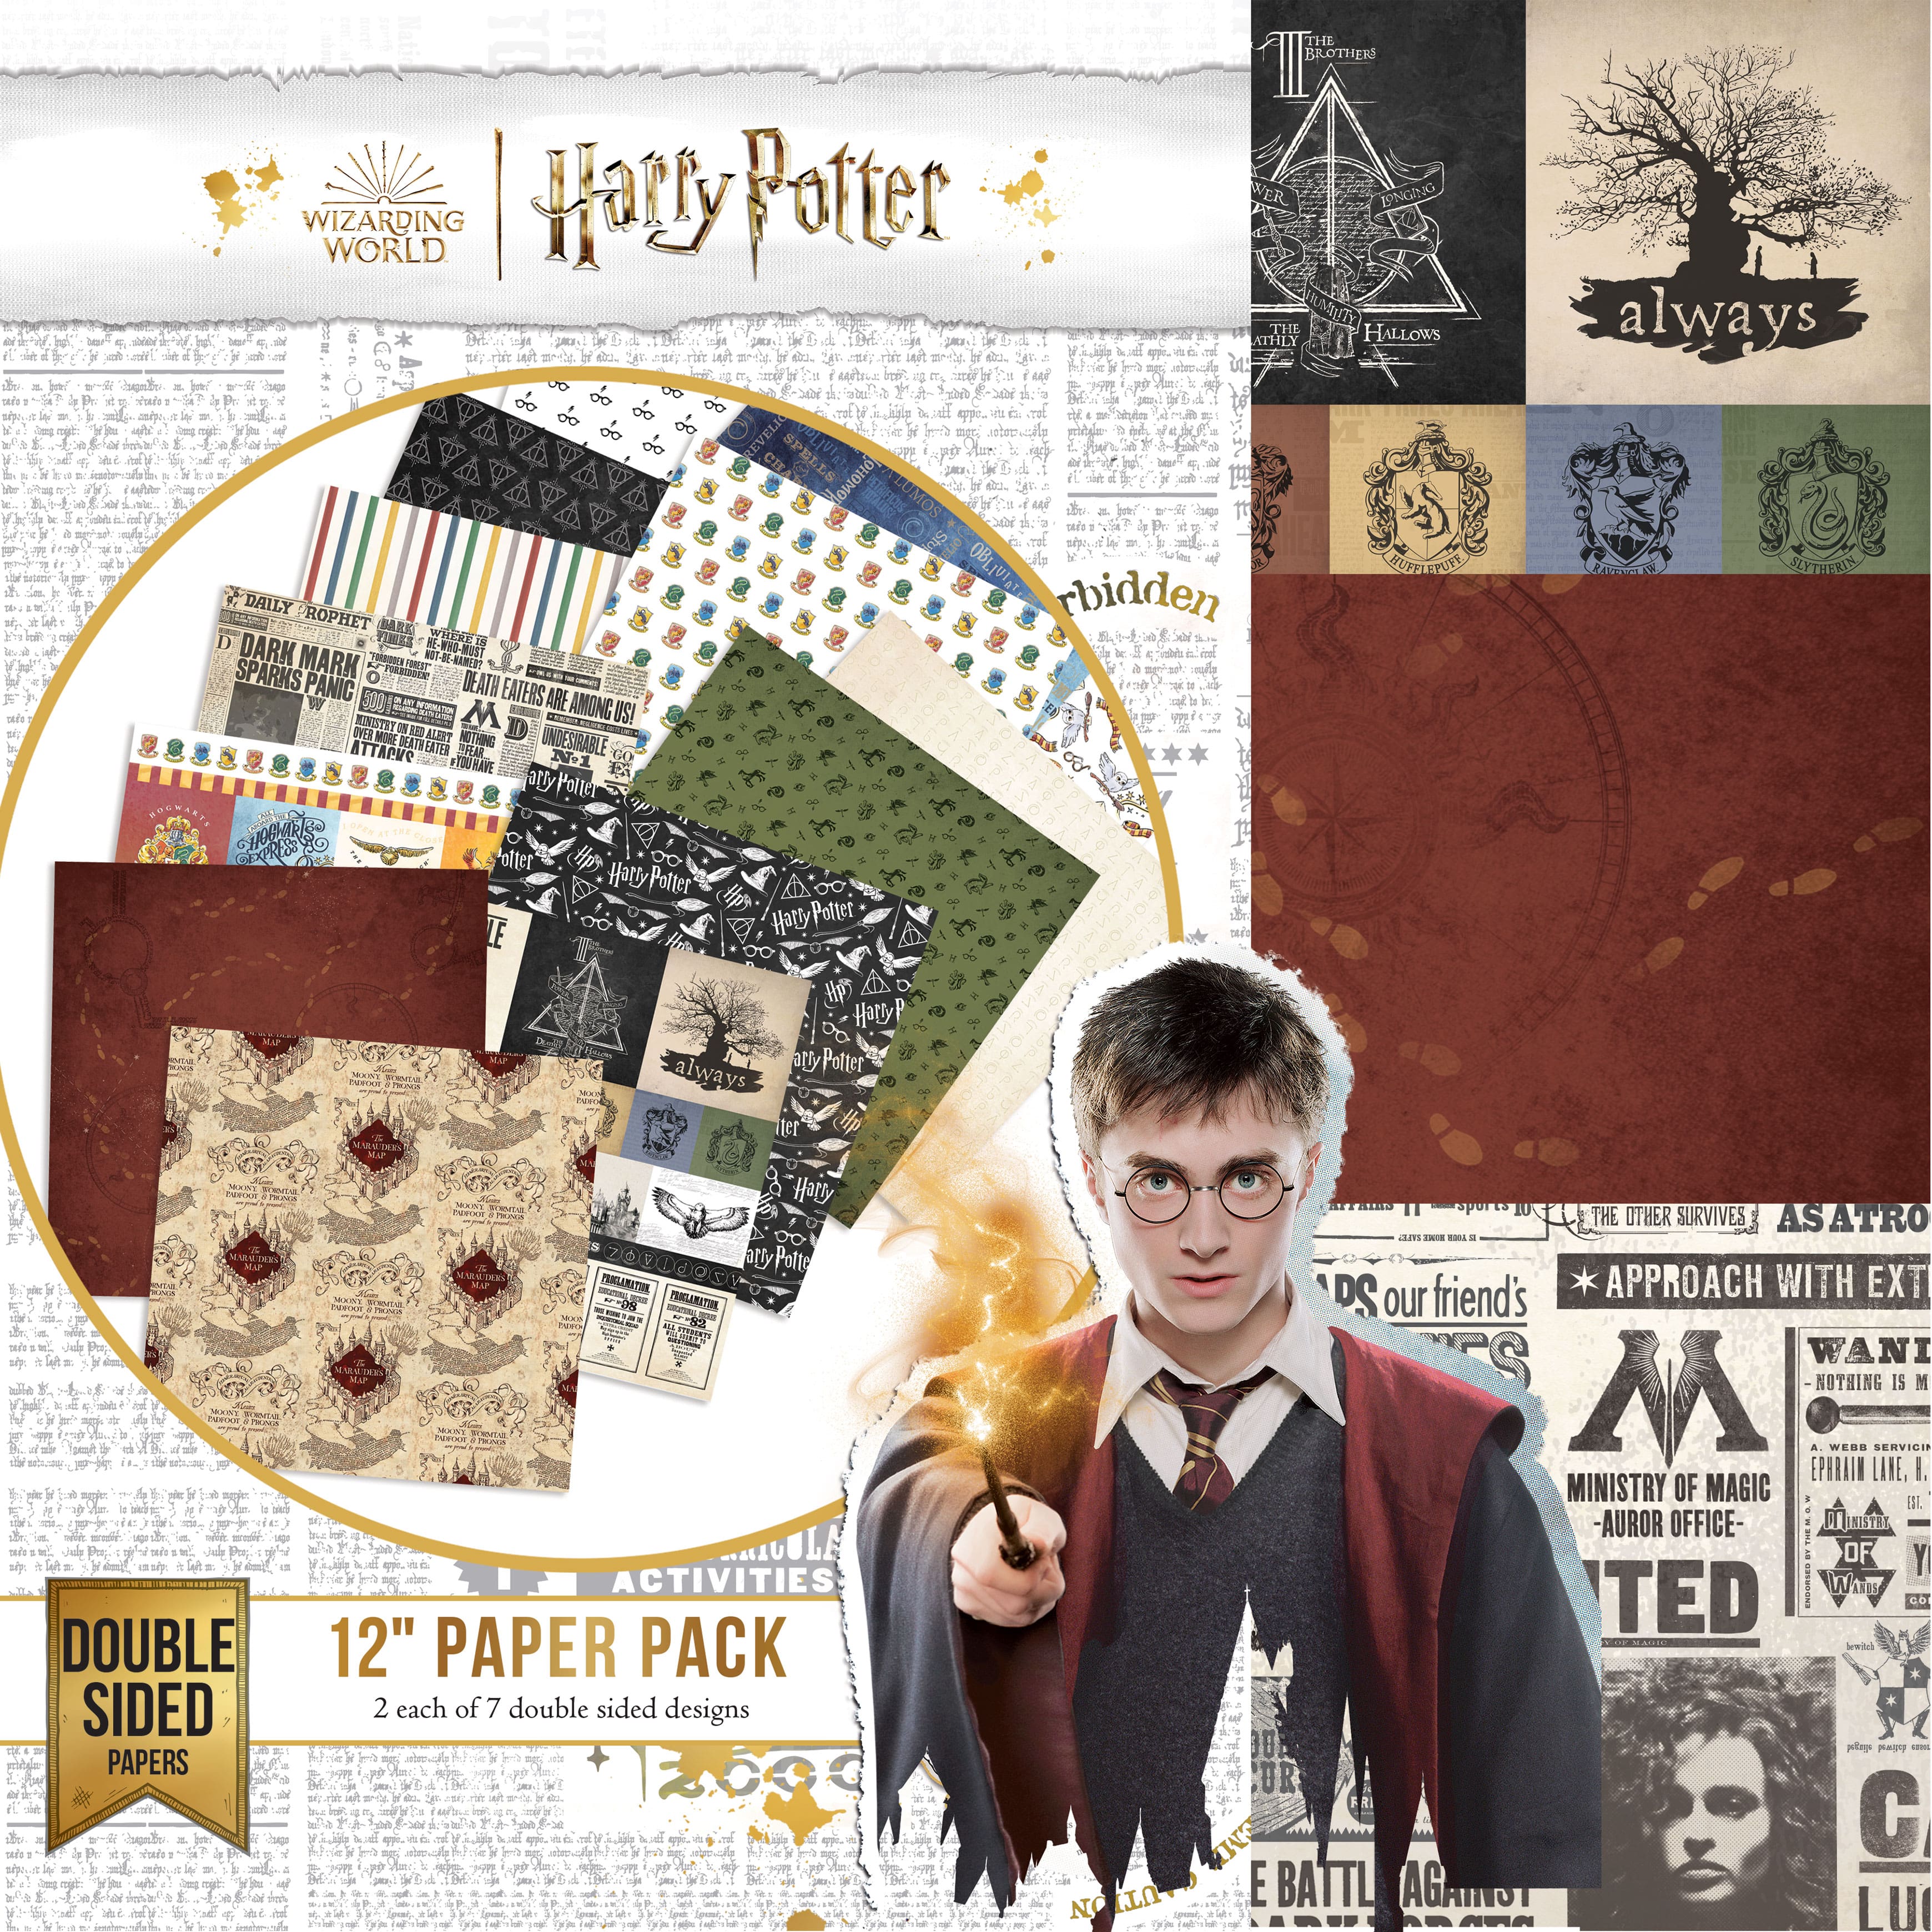 Paper House® Harry Potter™ Cardstock Scrapbook Stickers